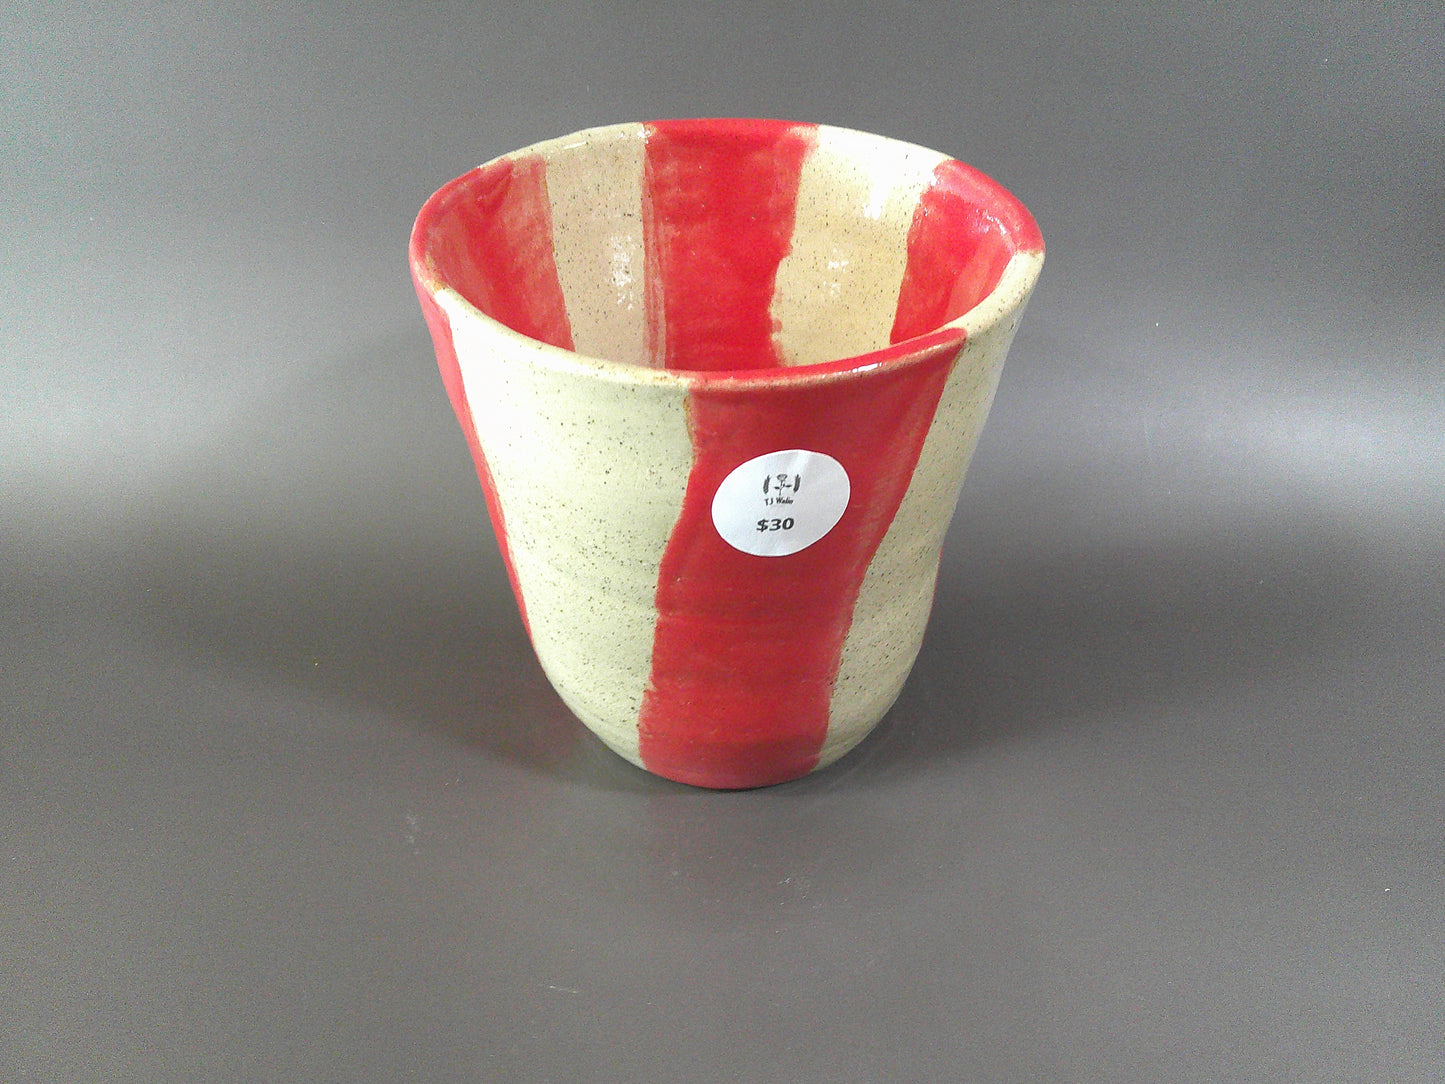 Red/White stripe pottery piece $30